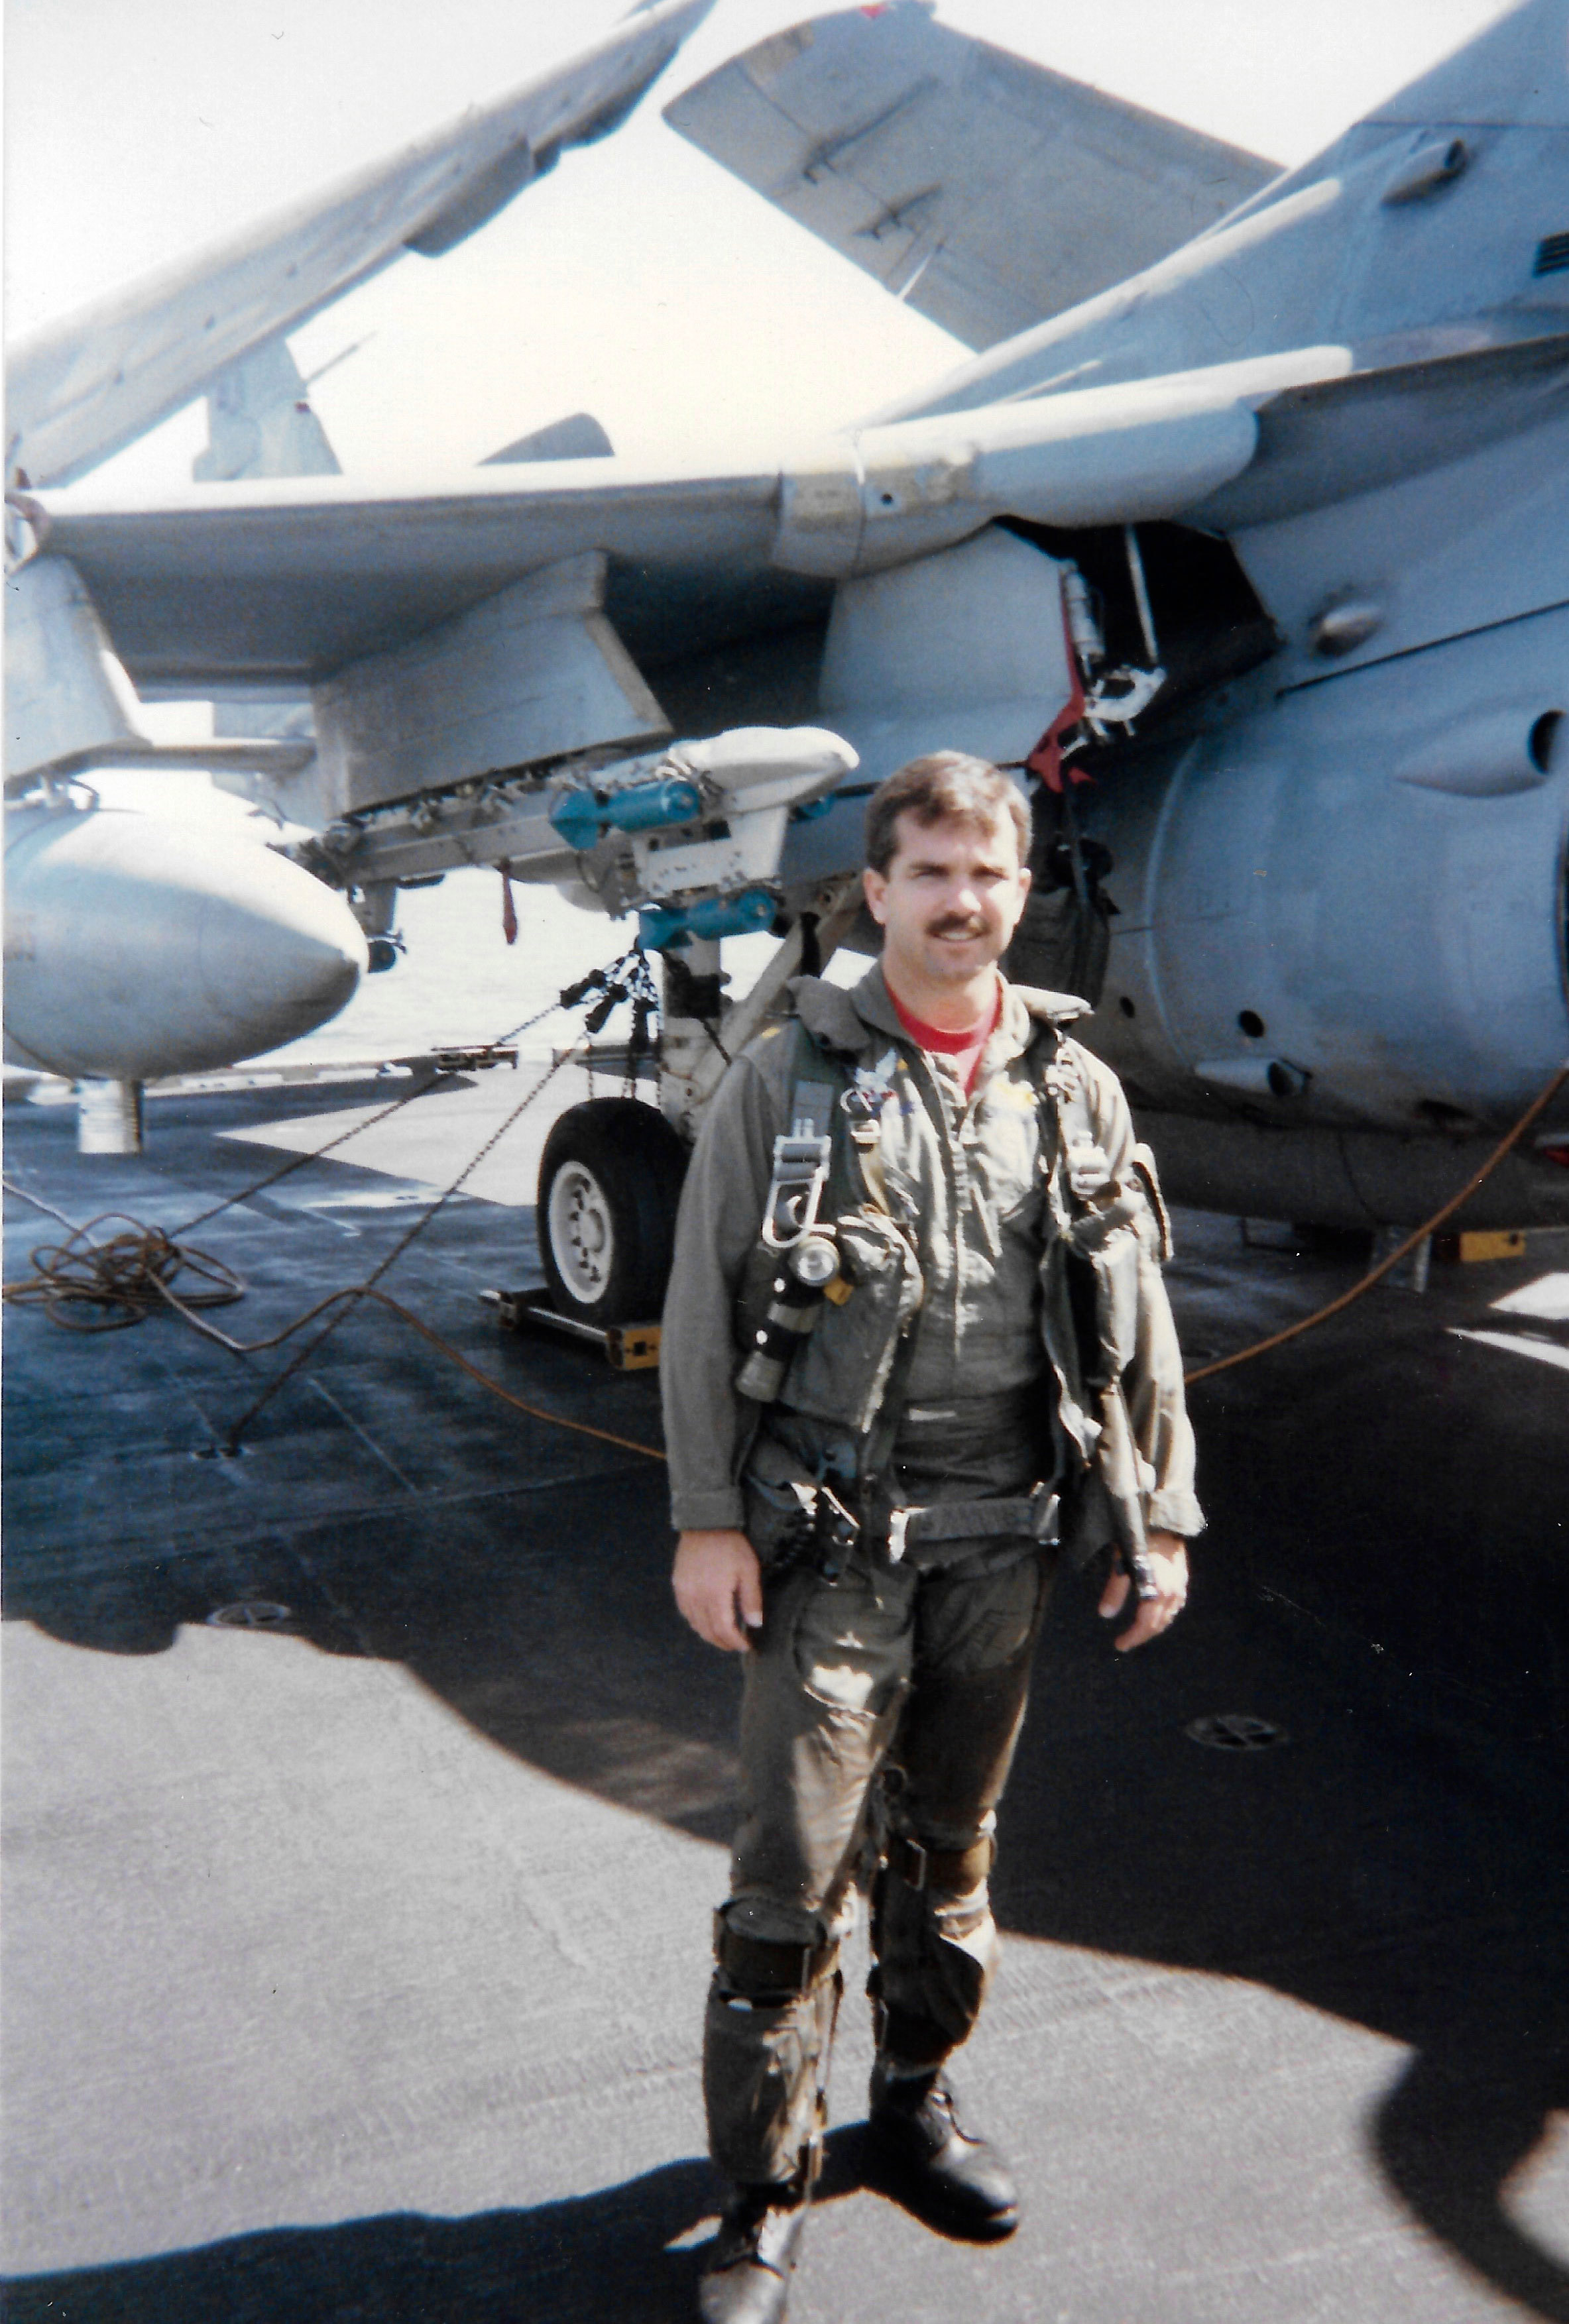 Navy A-6 Intruder pilot Jim Seaman. Navy Capt. Jim Seaman